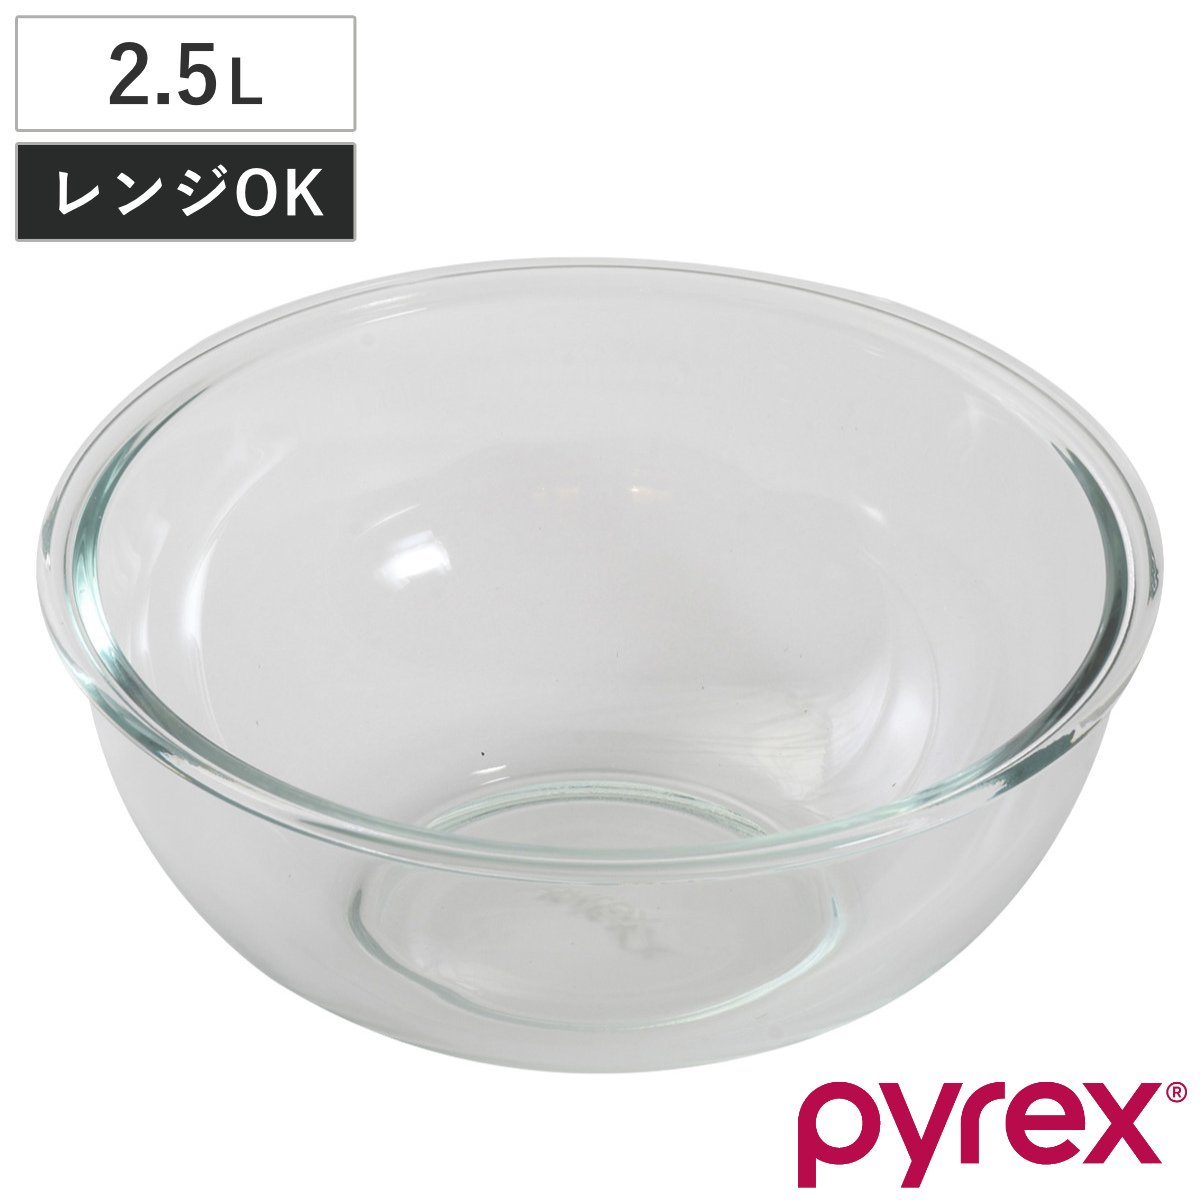 PYREX ボウル 1.6L 耐熱ガラス パイレックス （ 強化ガラス ガラス 